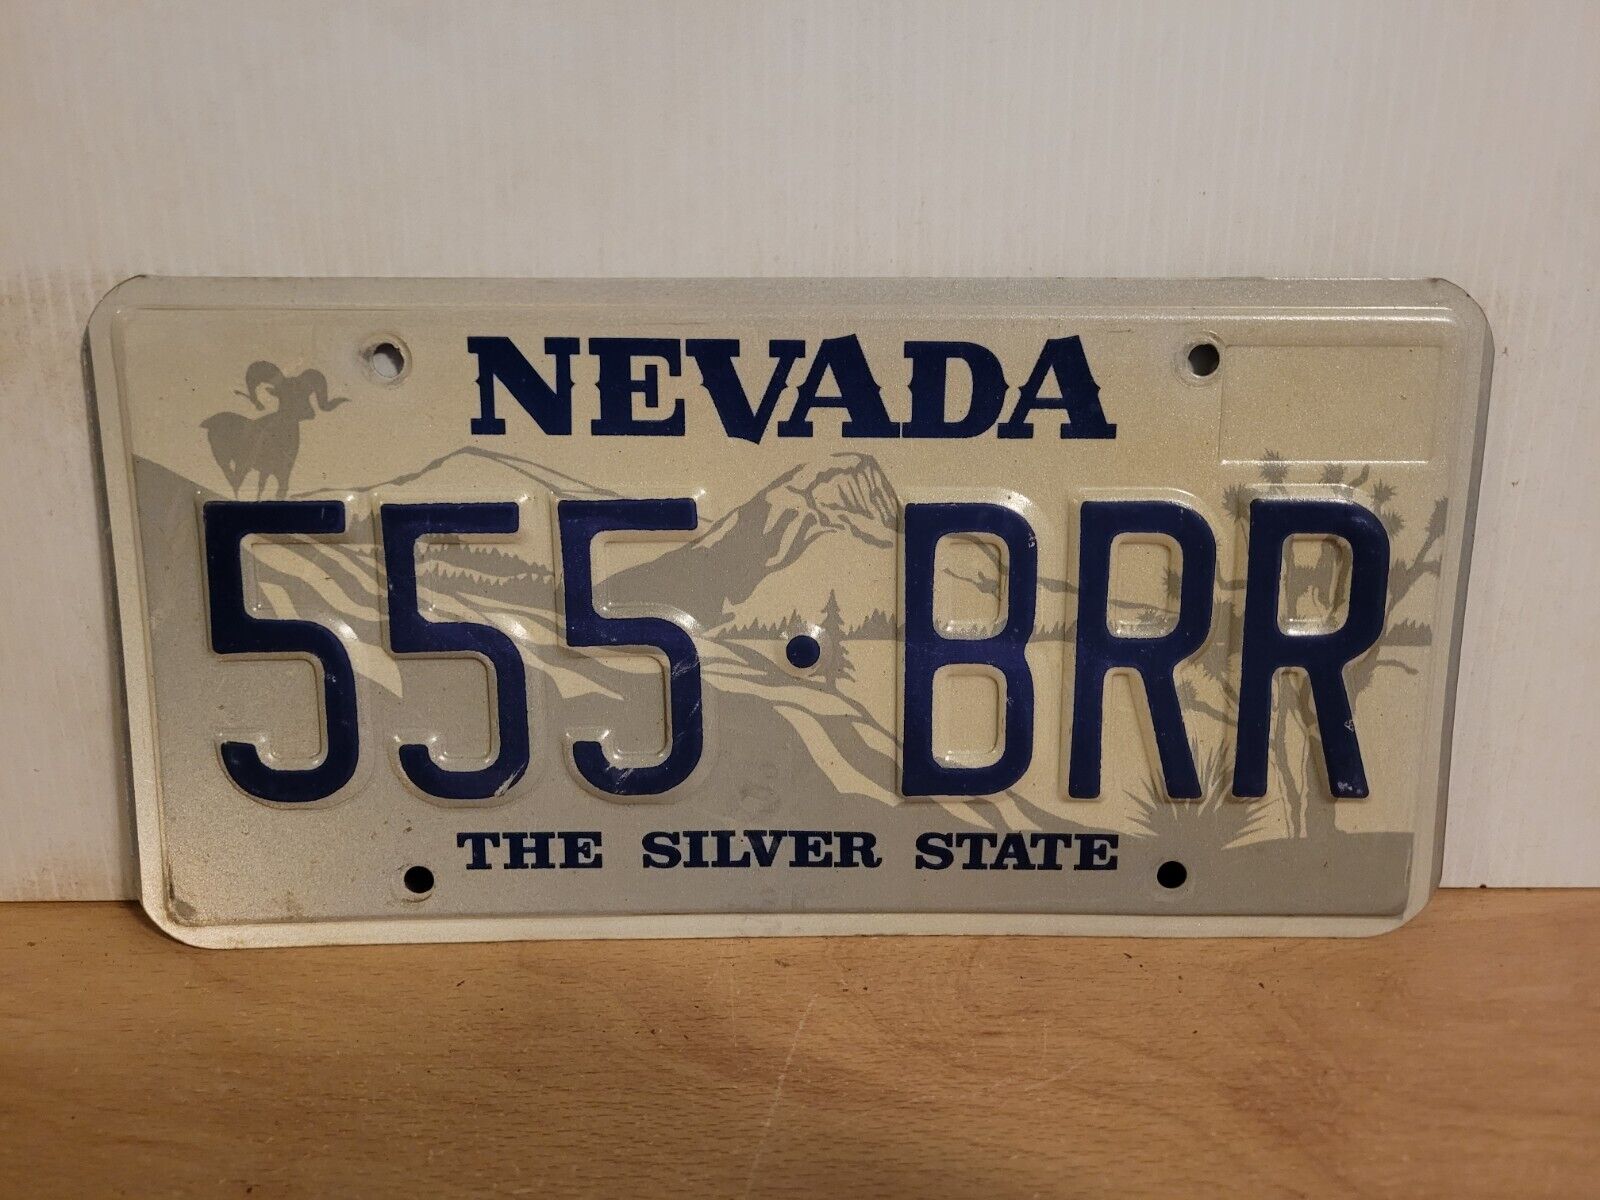 1985 Nevada TRIPPLE NUMBER License Plate Tag.